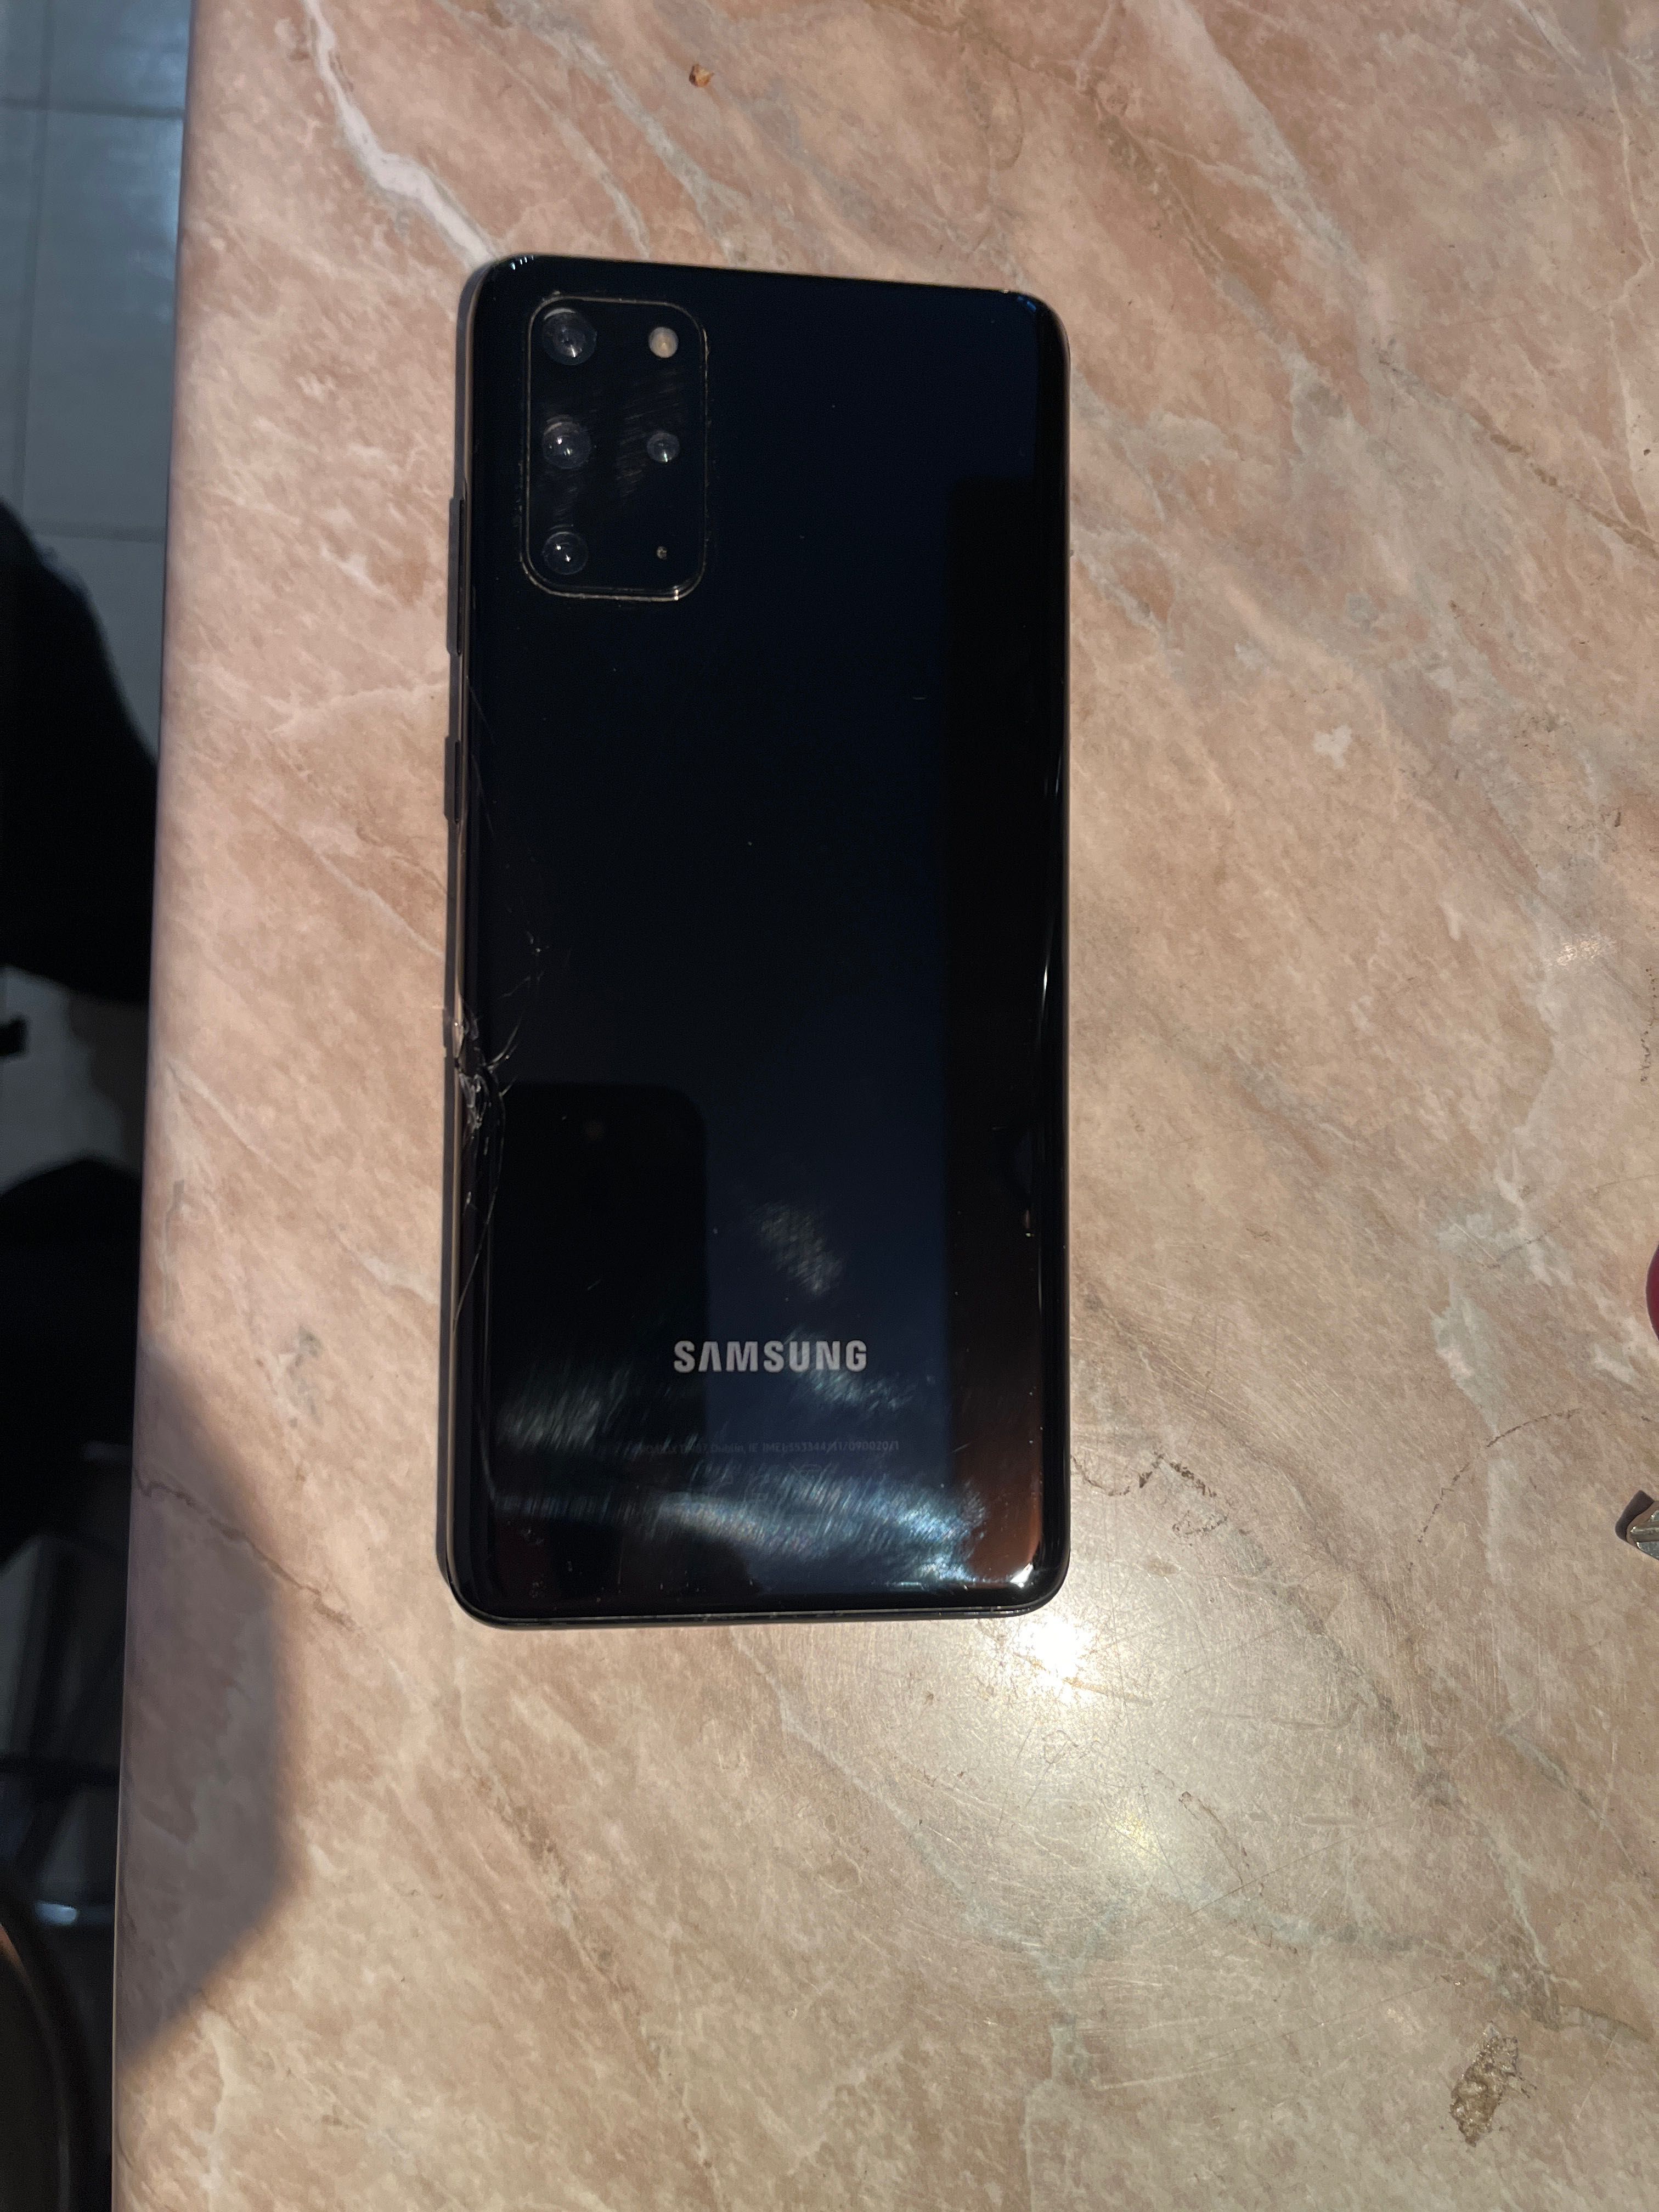 Samsung S20 Plus defect